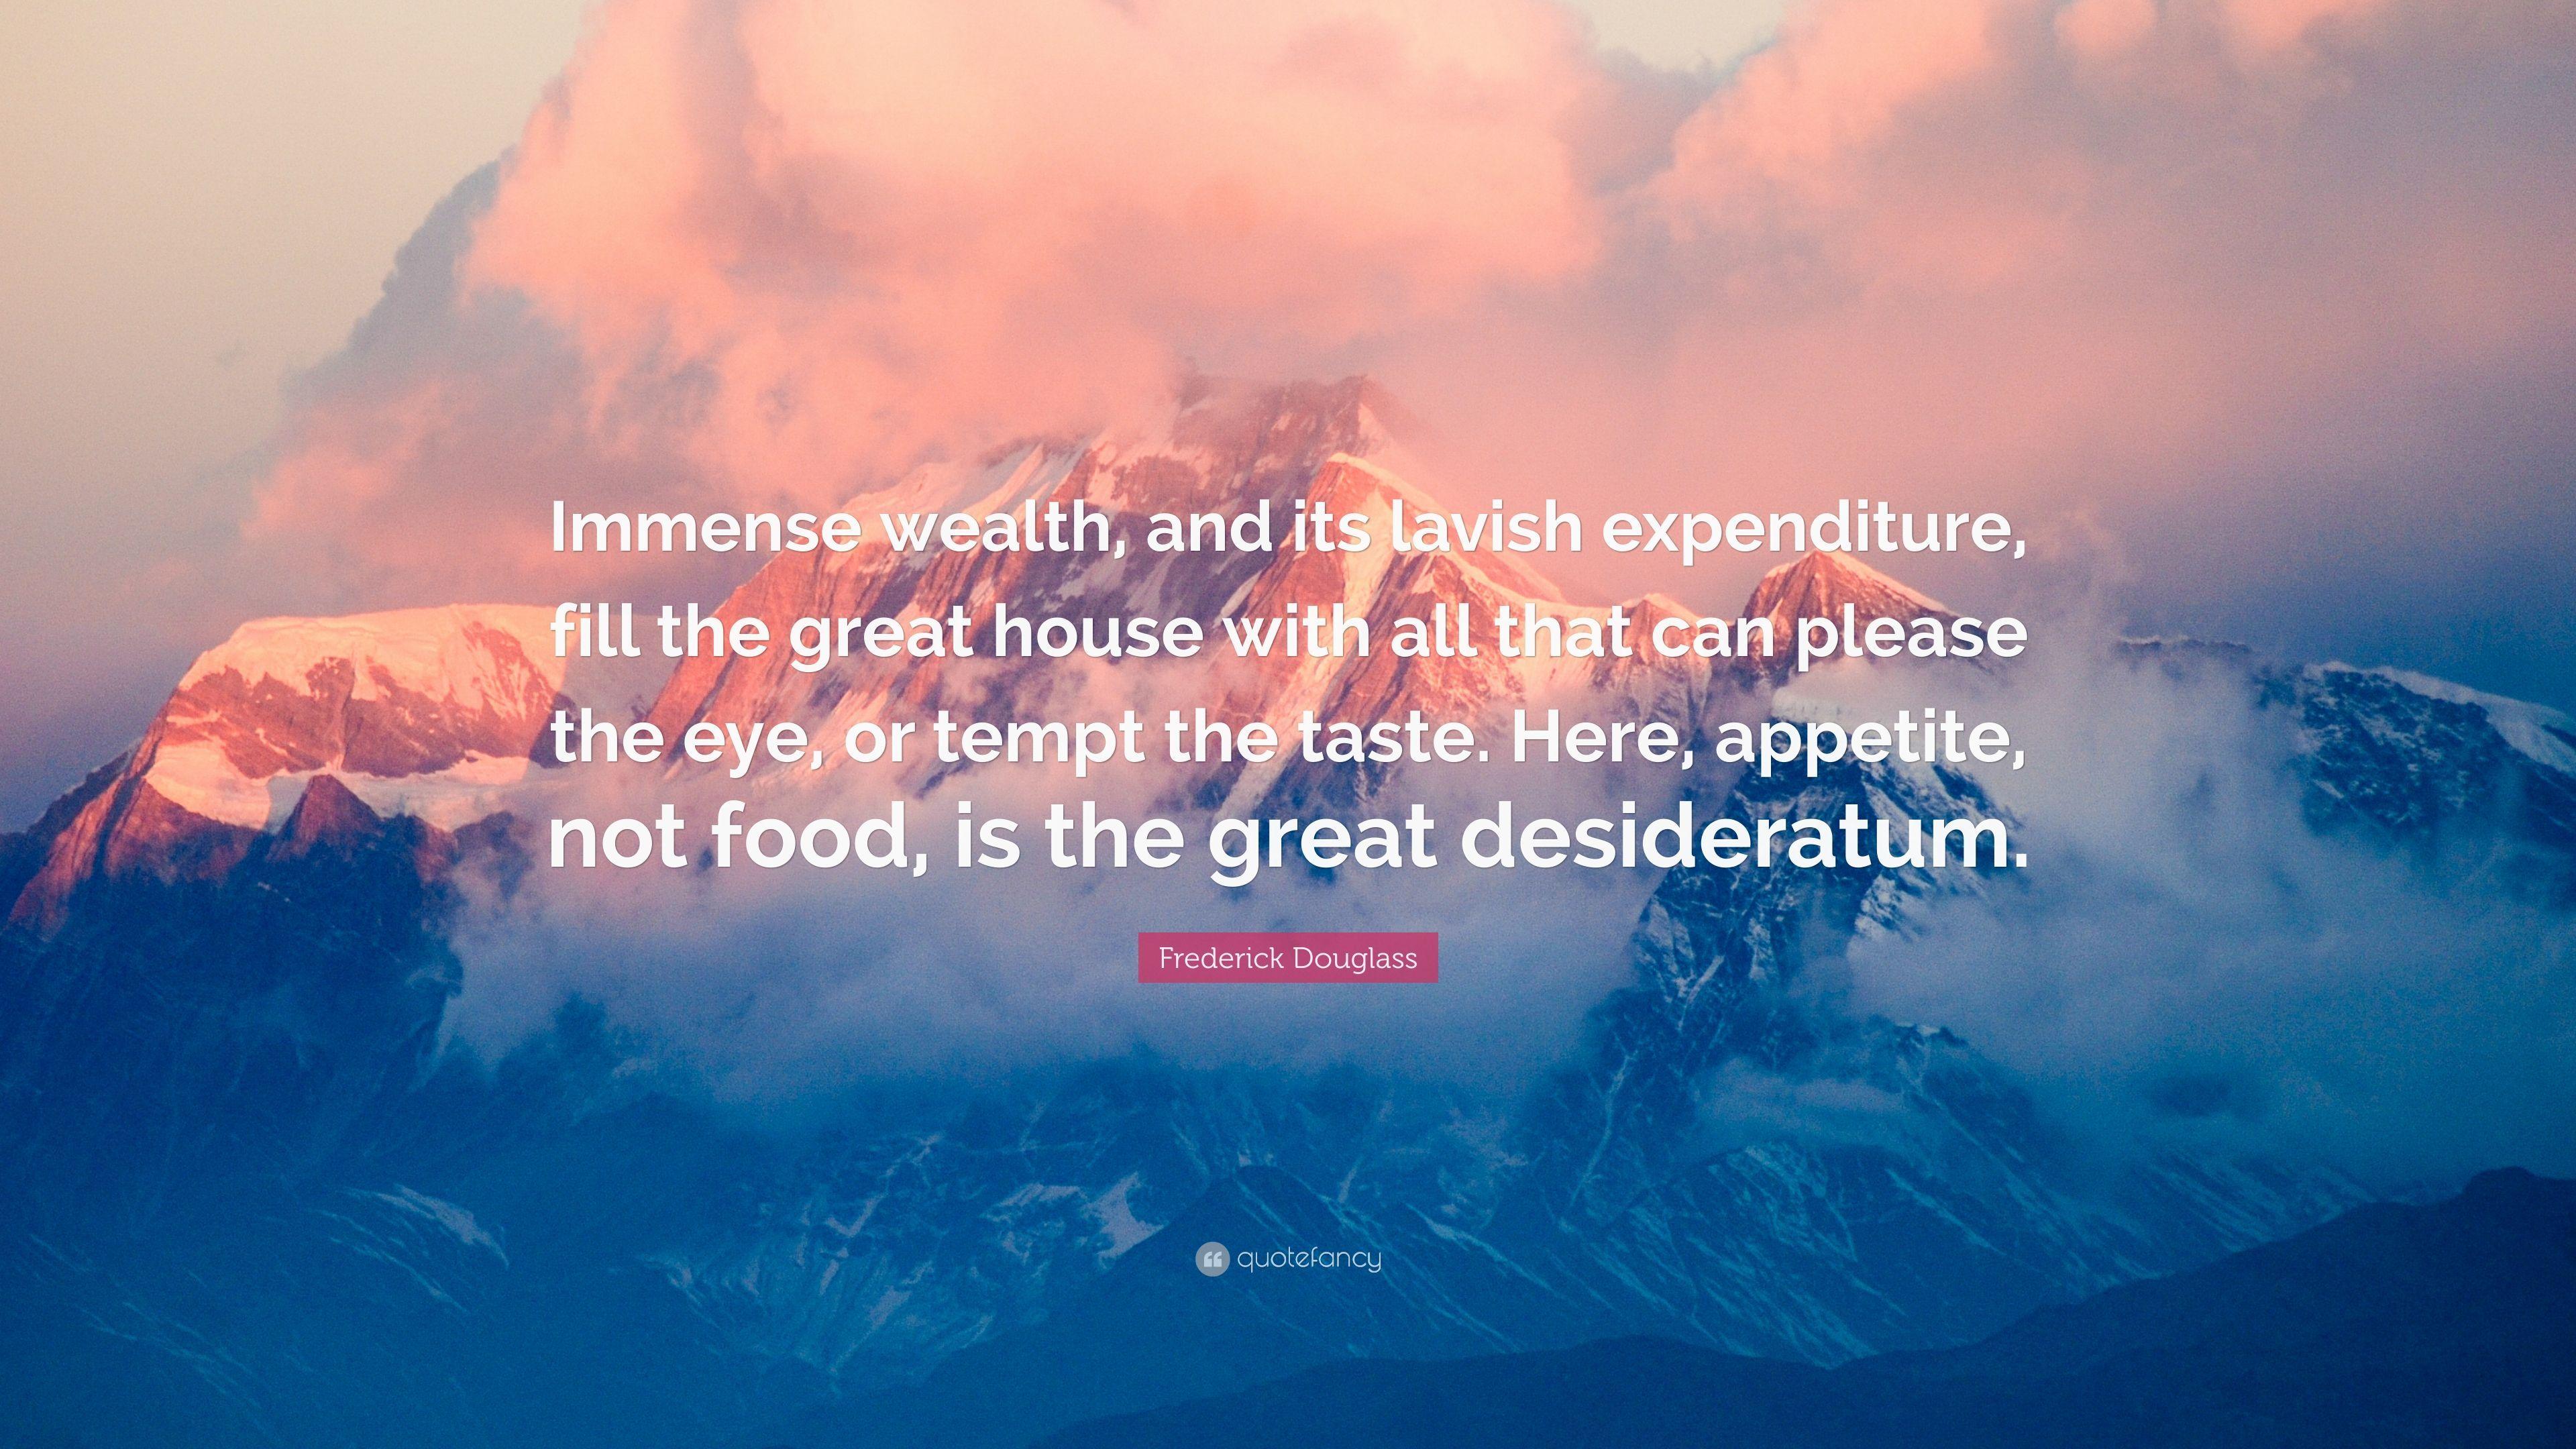 Frederick Douglass Quote: “Immense wealth, and its lavish